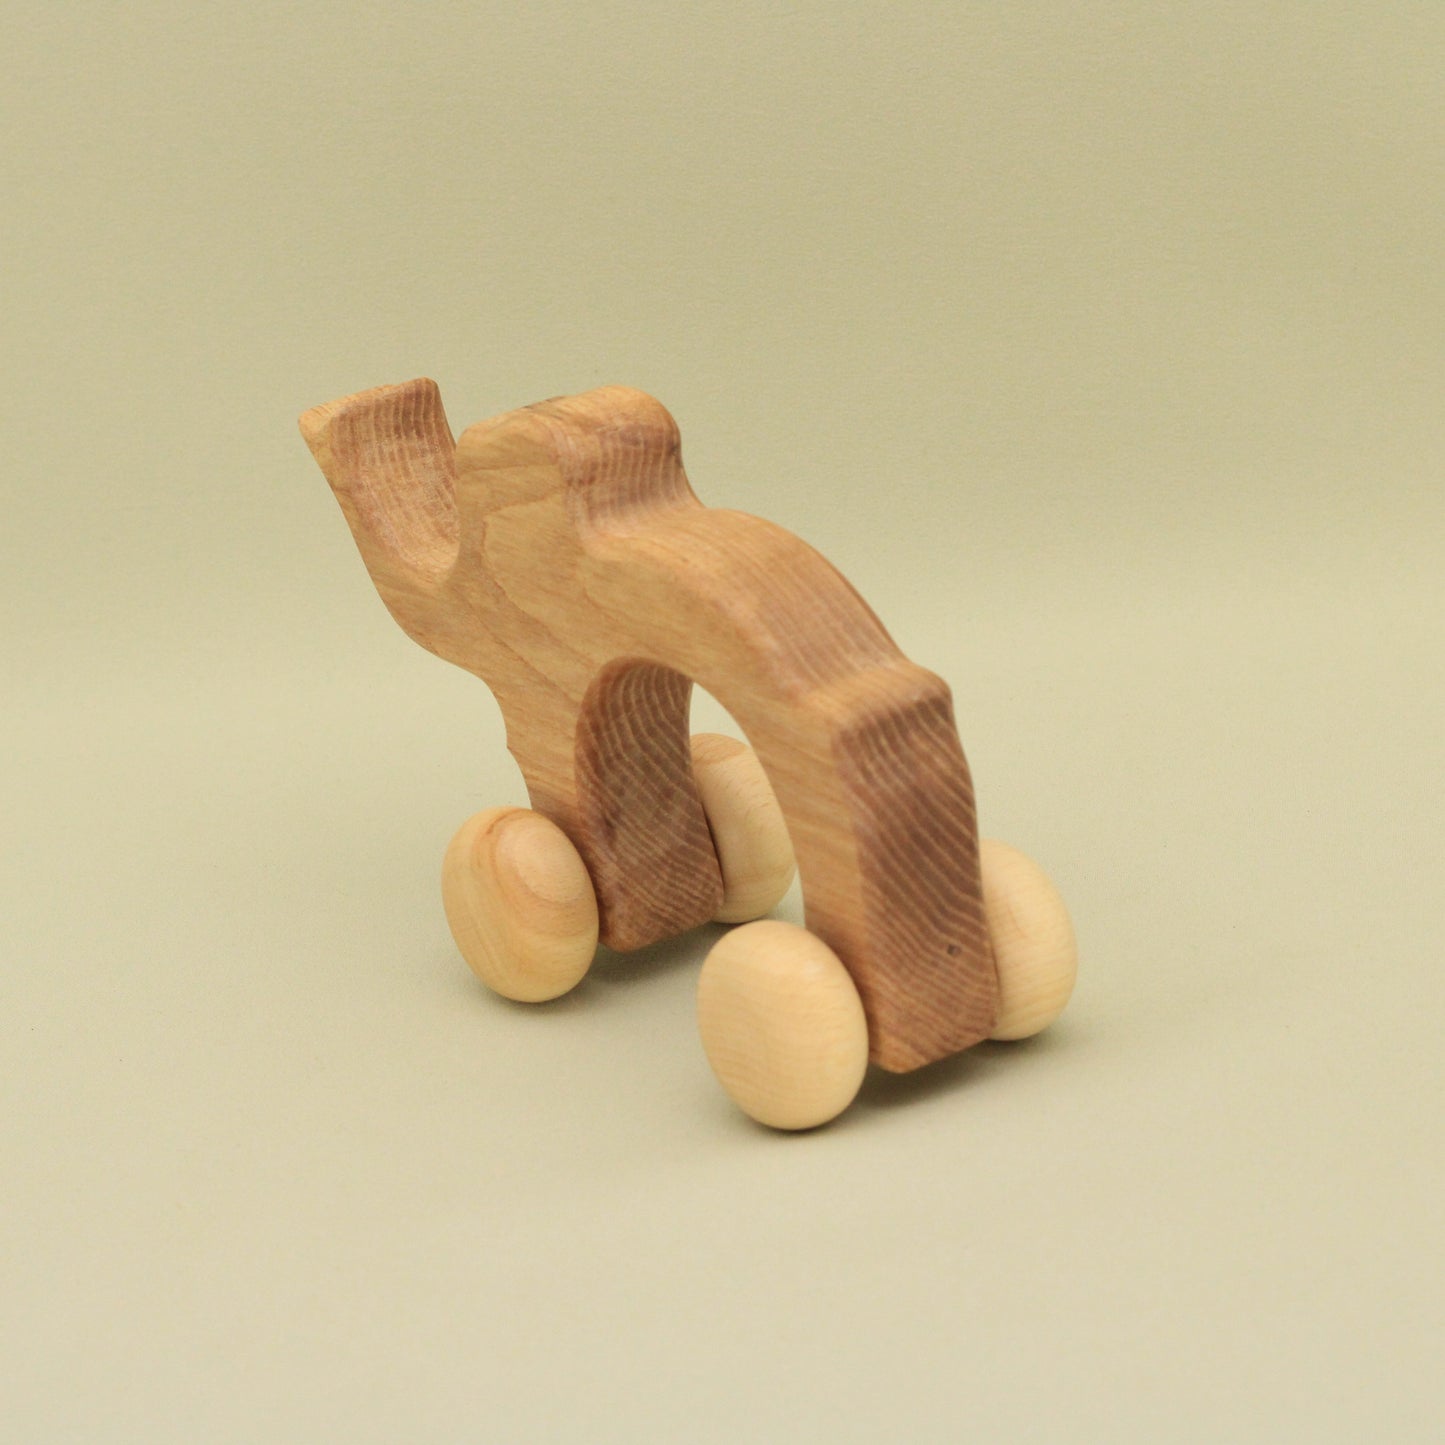 Lotes Toys Wooden Elephant WA04